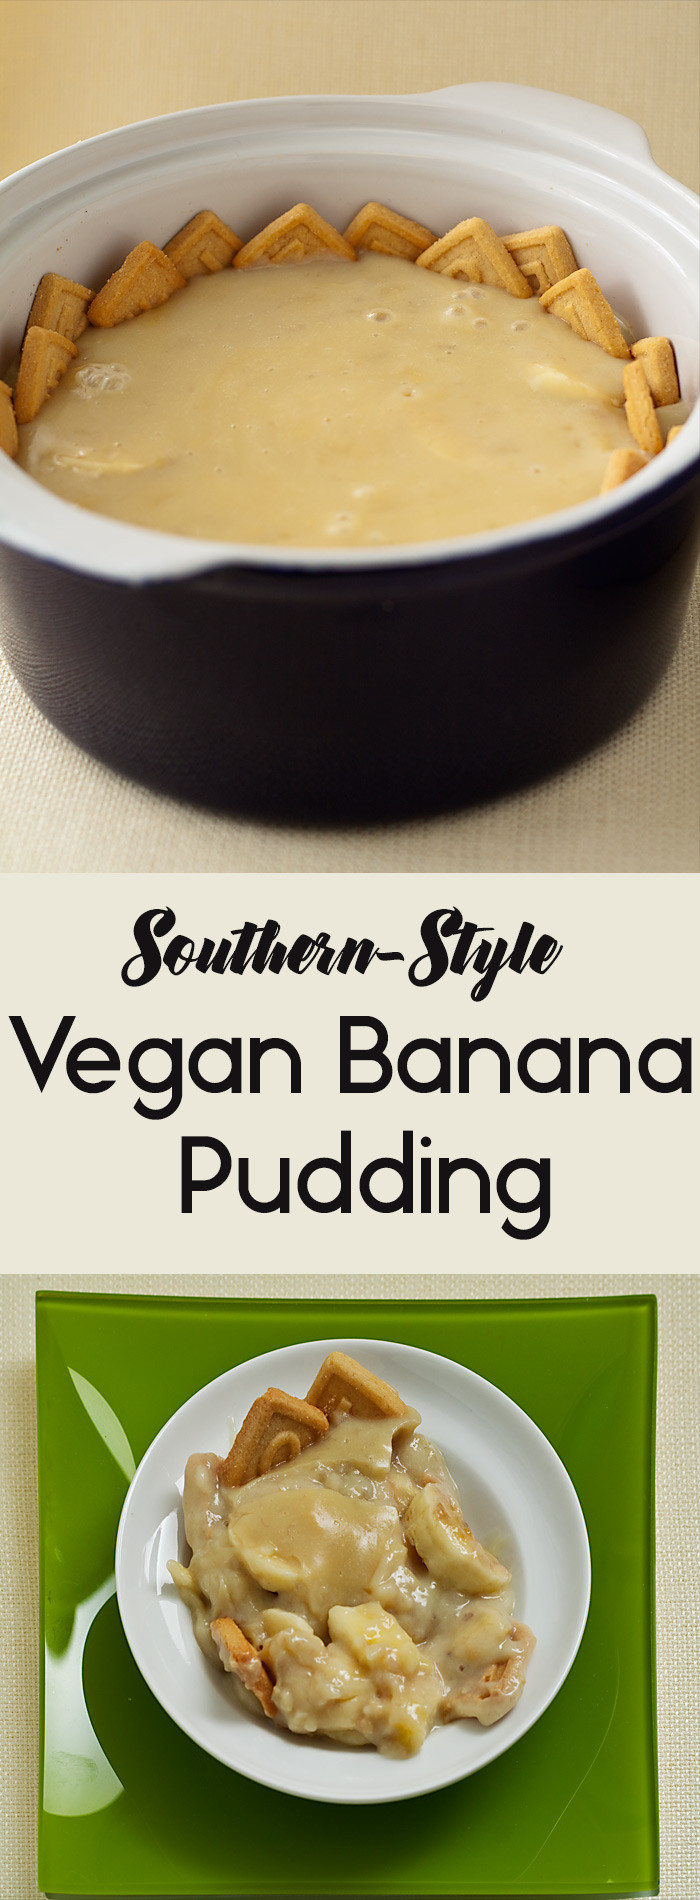 Vegan Puddings Recipes
 Southern Style Vegan Banana Pudding